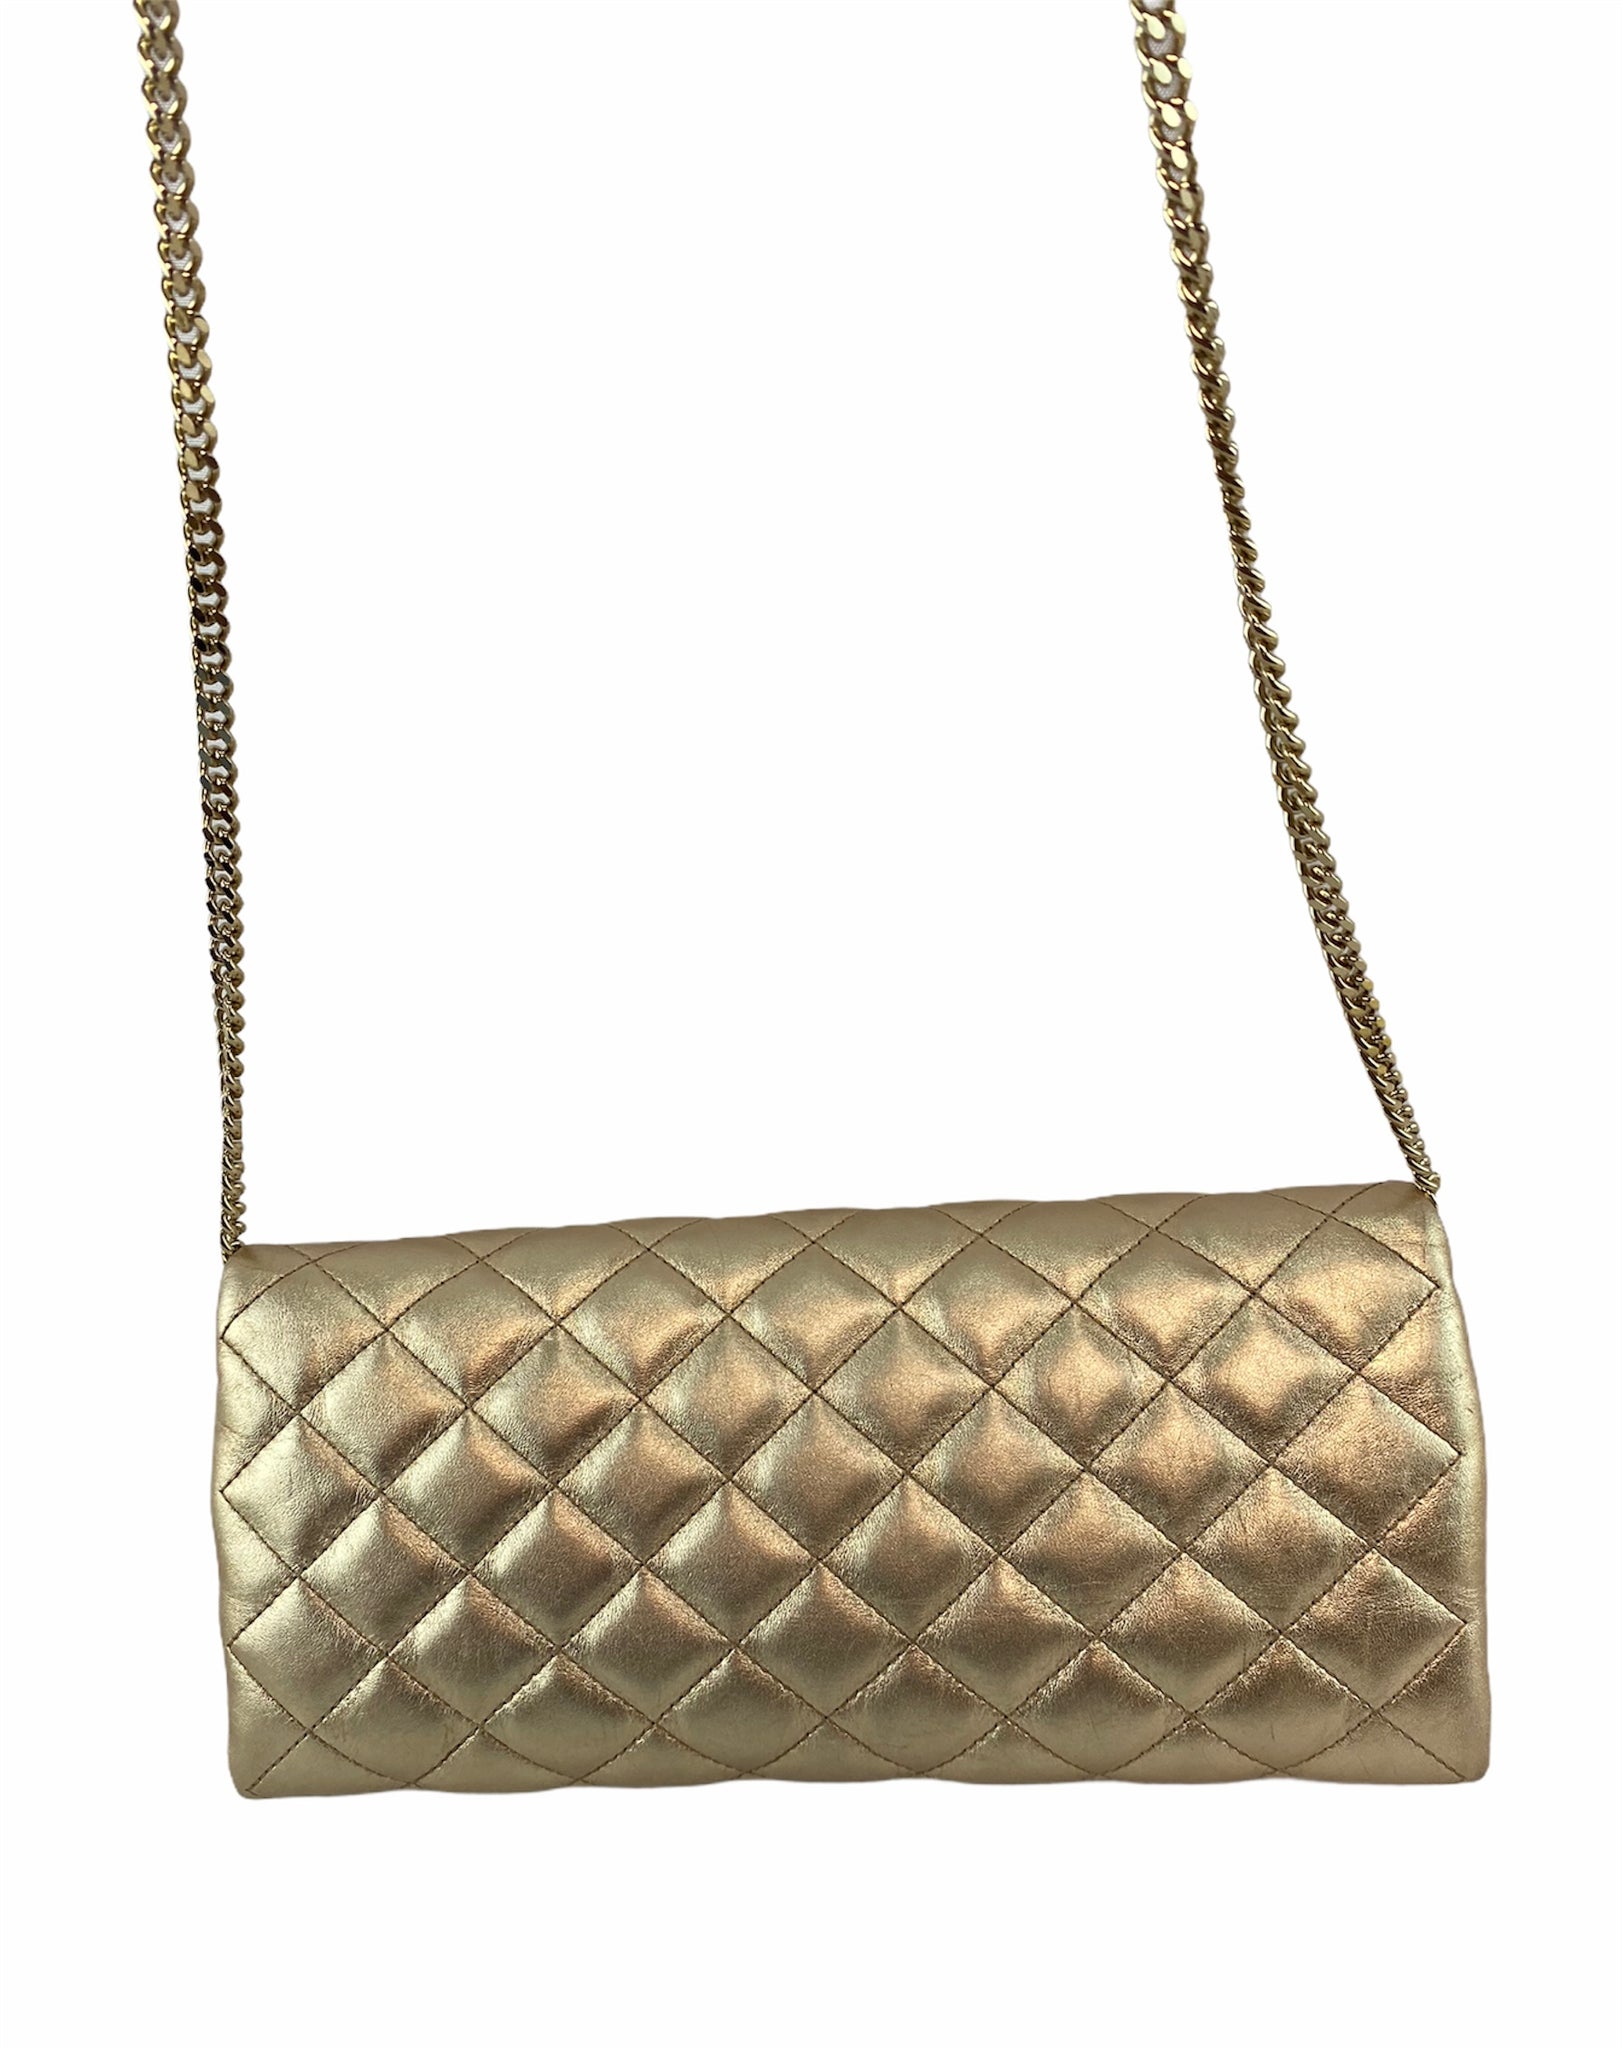 Carolina Herrera, Bags, New Carolina Herrera Metallic Gold Clutch Bag